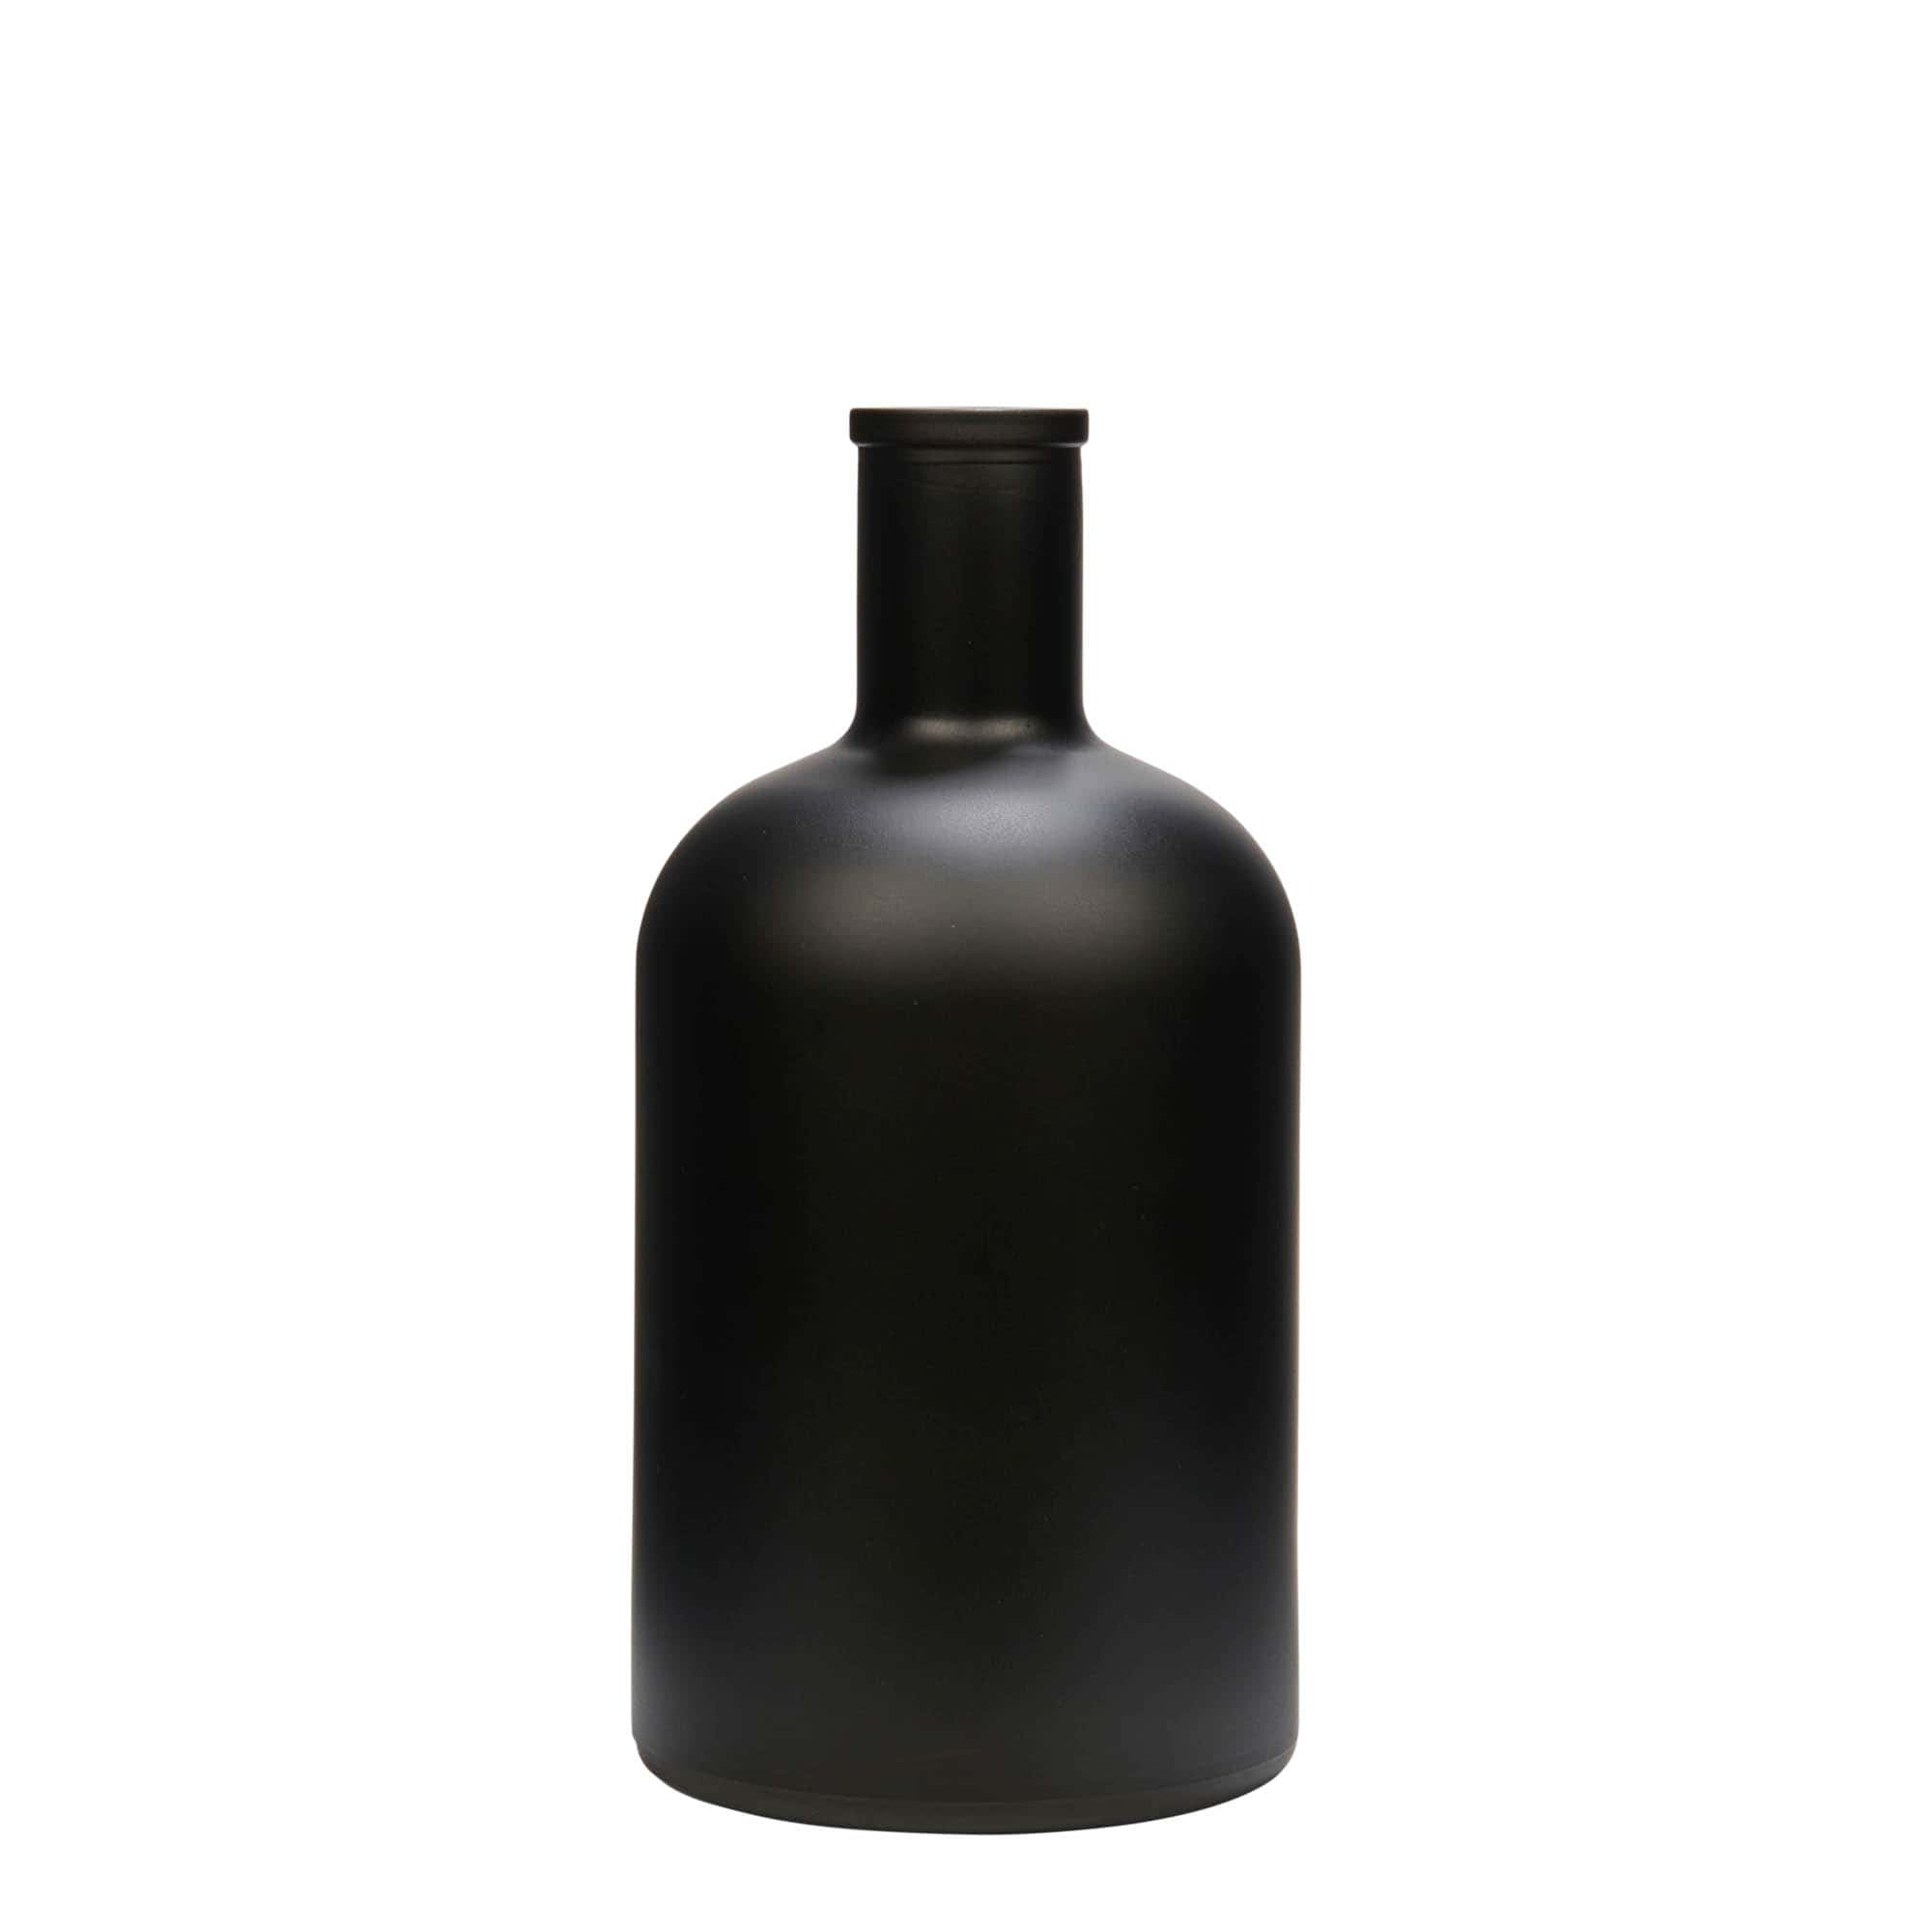 700 ml glass bottle 'Gerardino', black, closure: cork